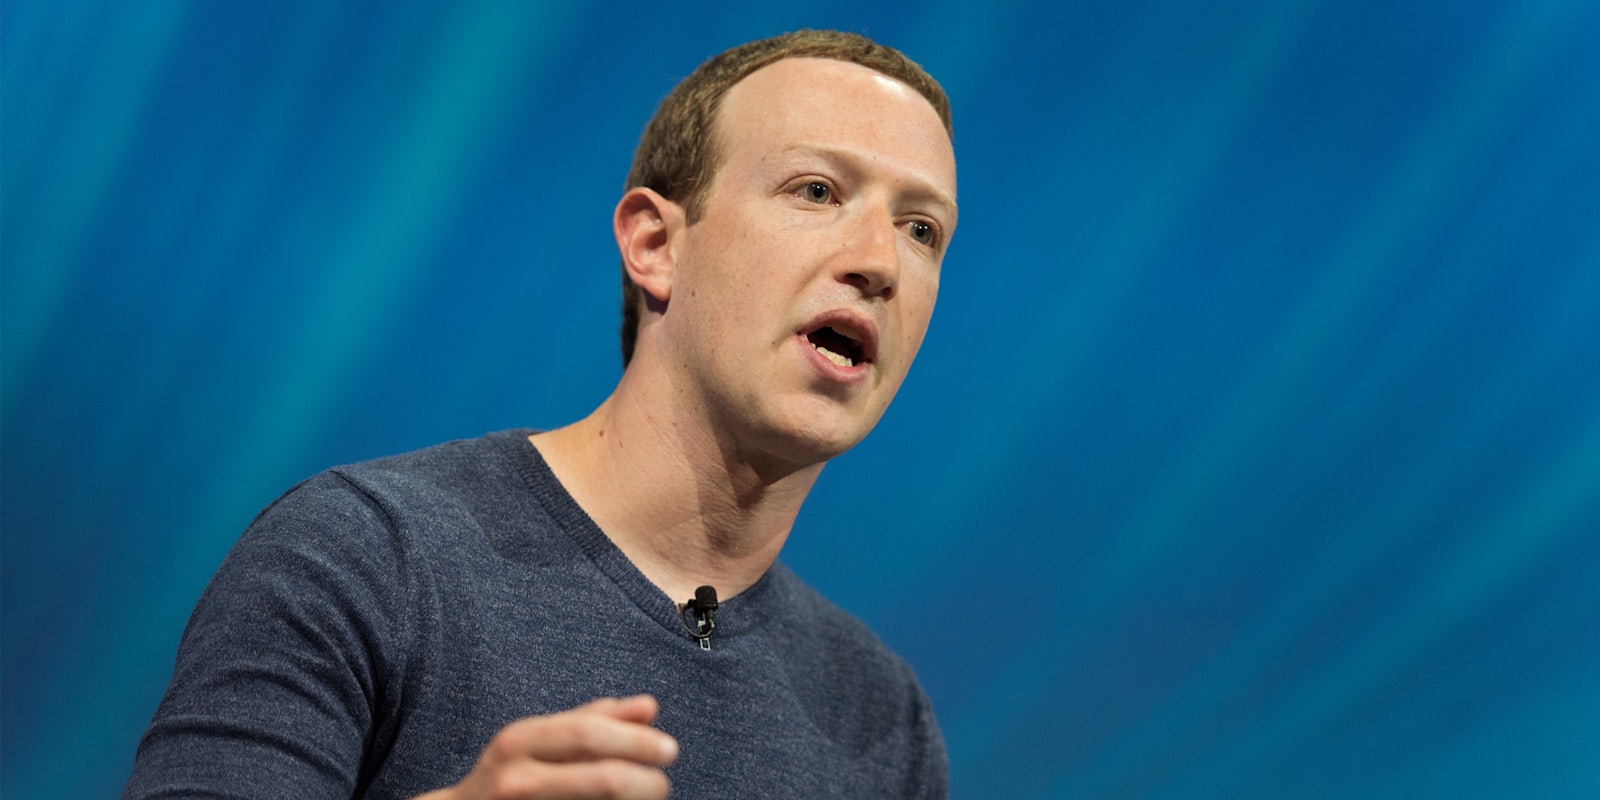 Mark Zuckerberg speaking in front of blue background